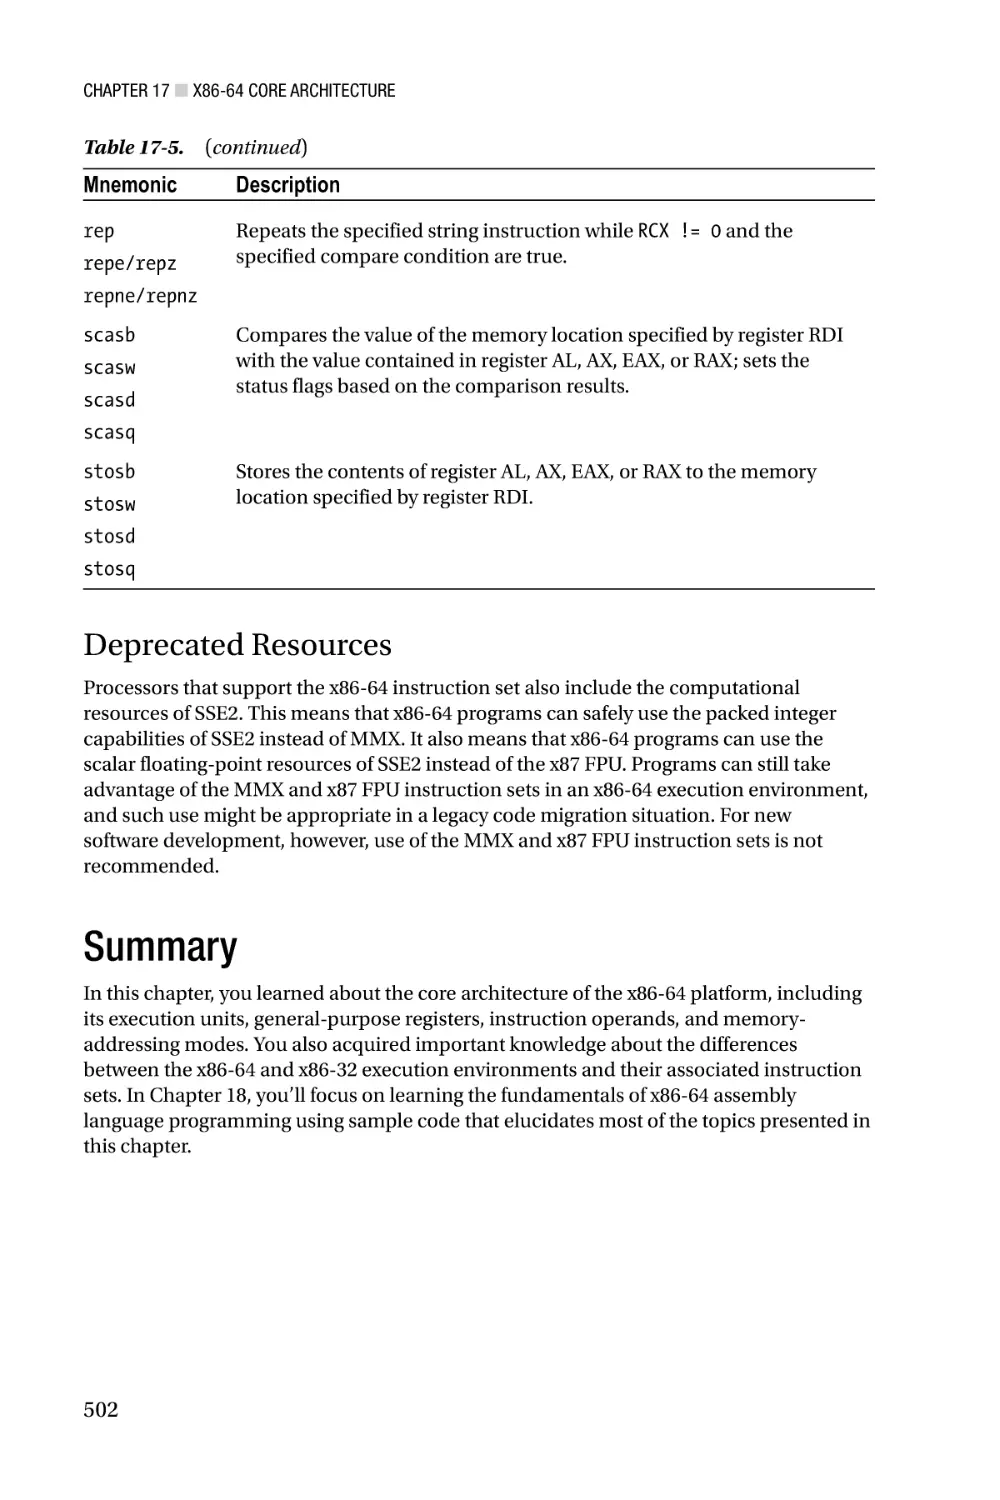 Deprecated Resources
Summary